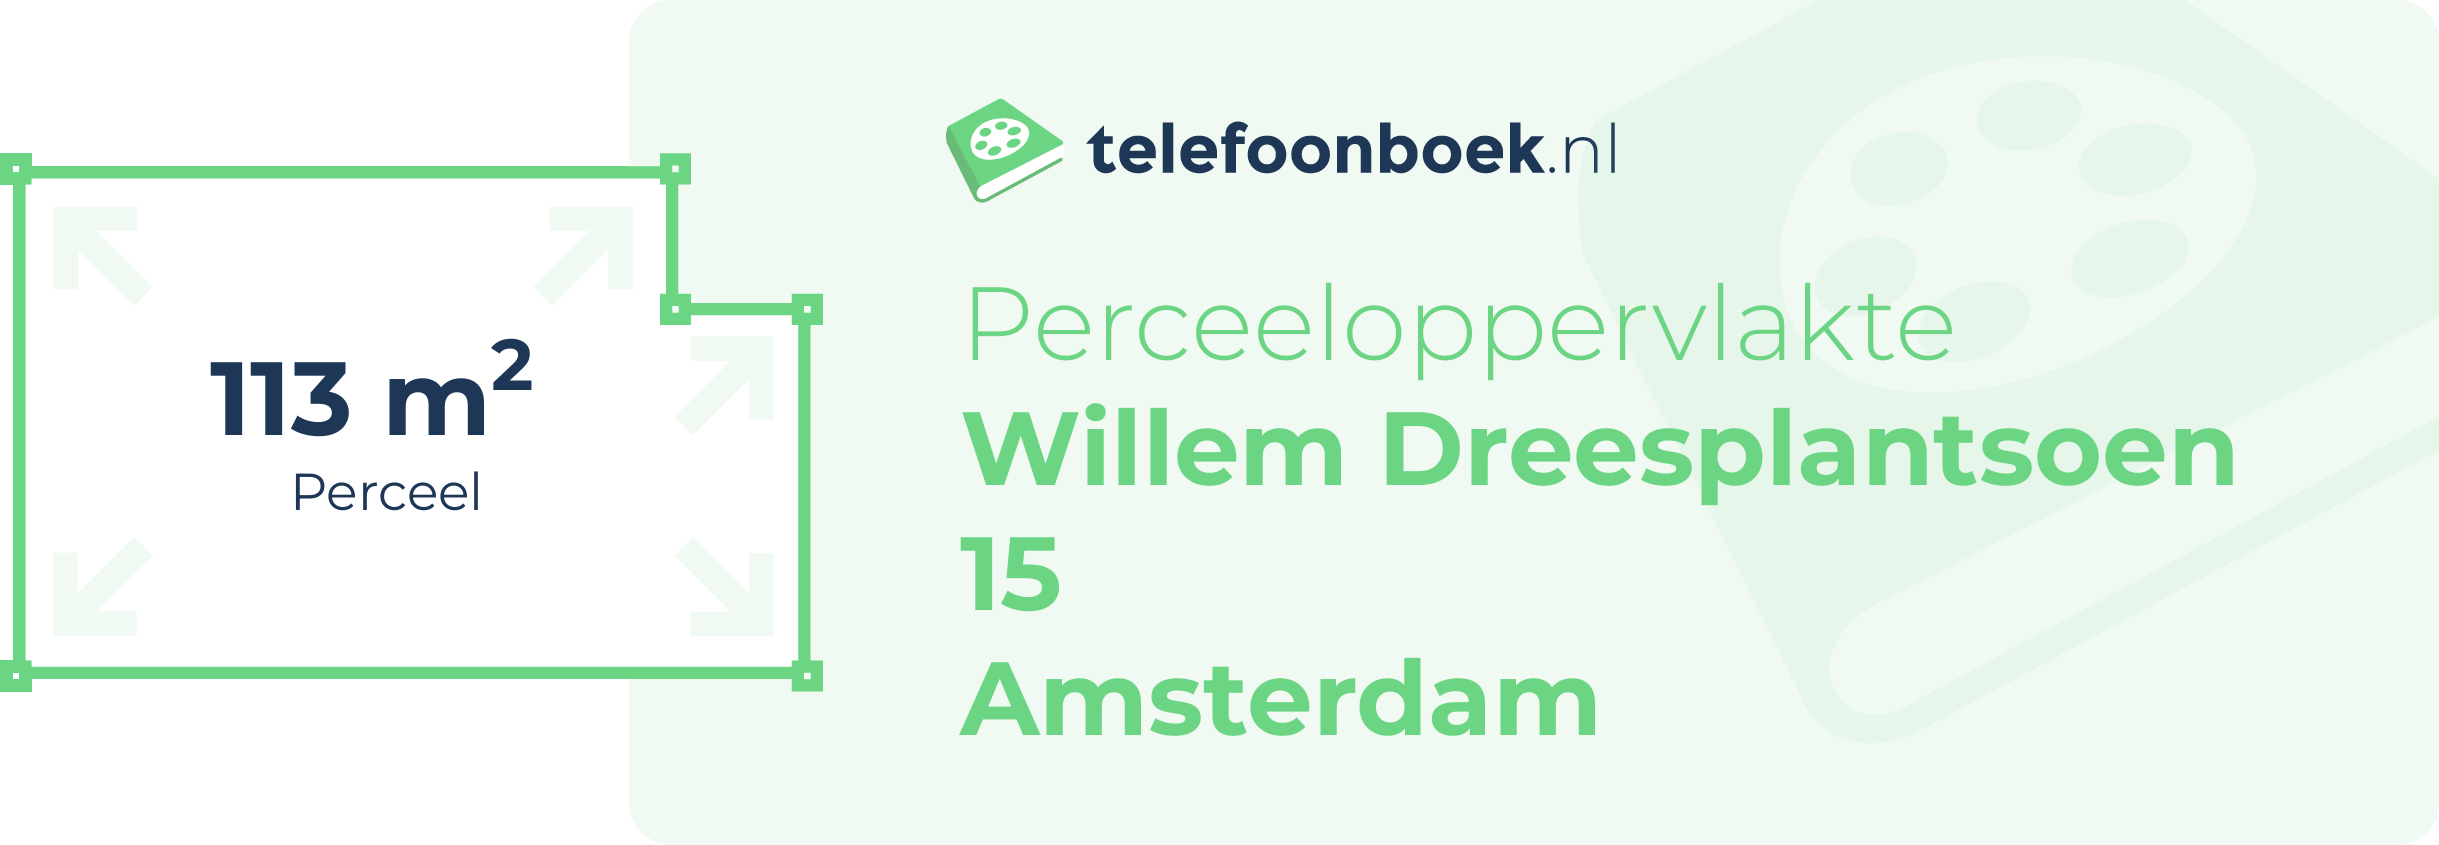 Perceeloppervlakte Willem Dreesplantsoen 15 Amsterdam